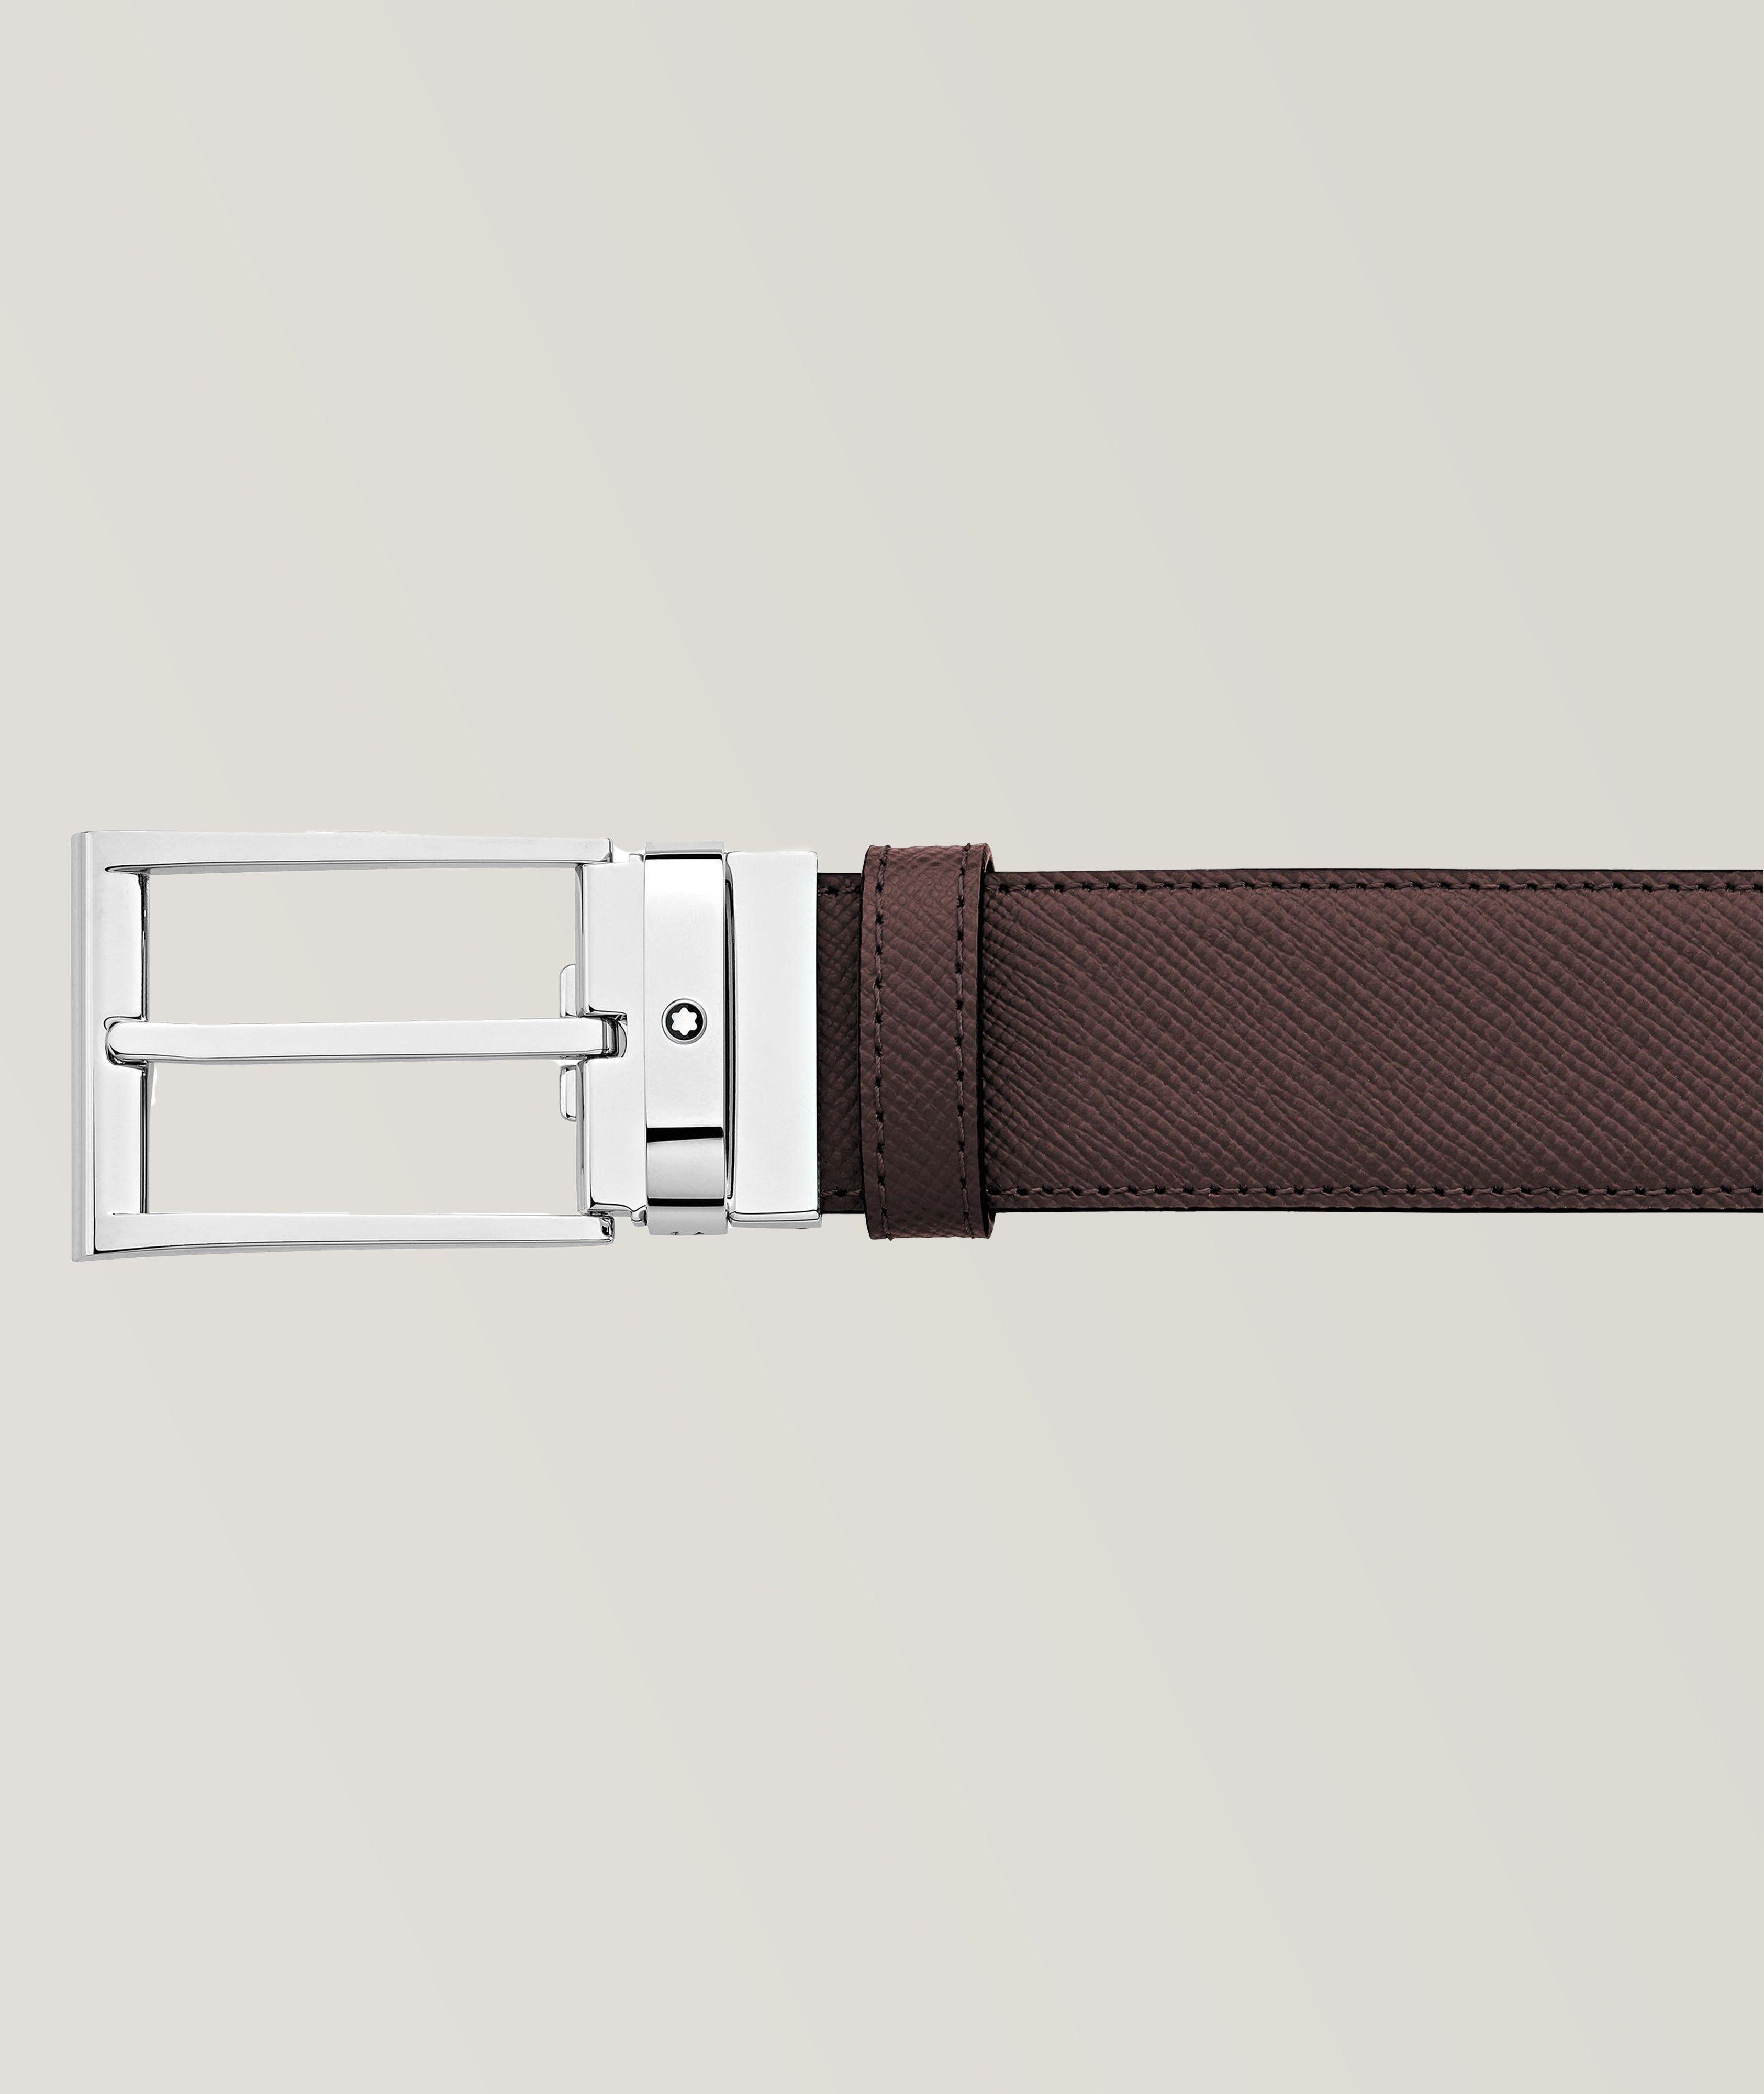 Reversible Leather Belt image 1